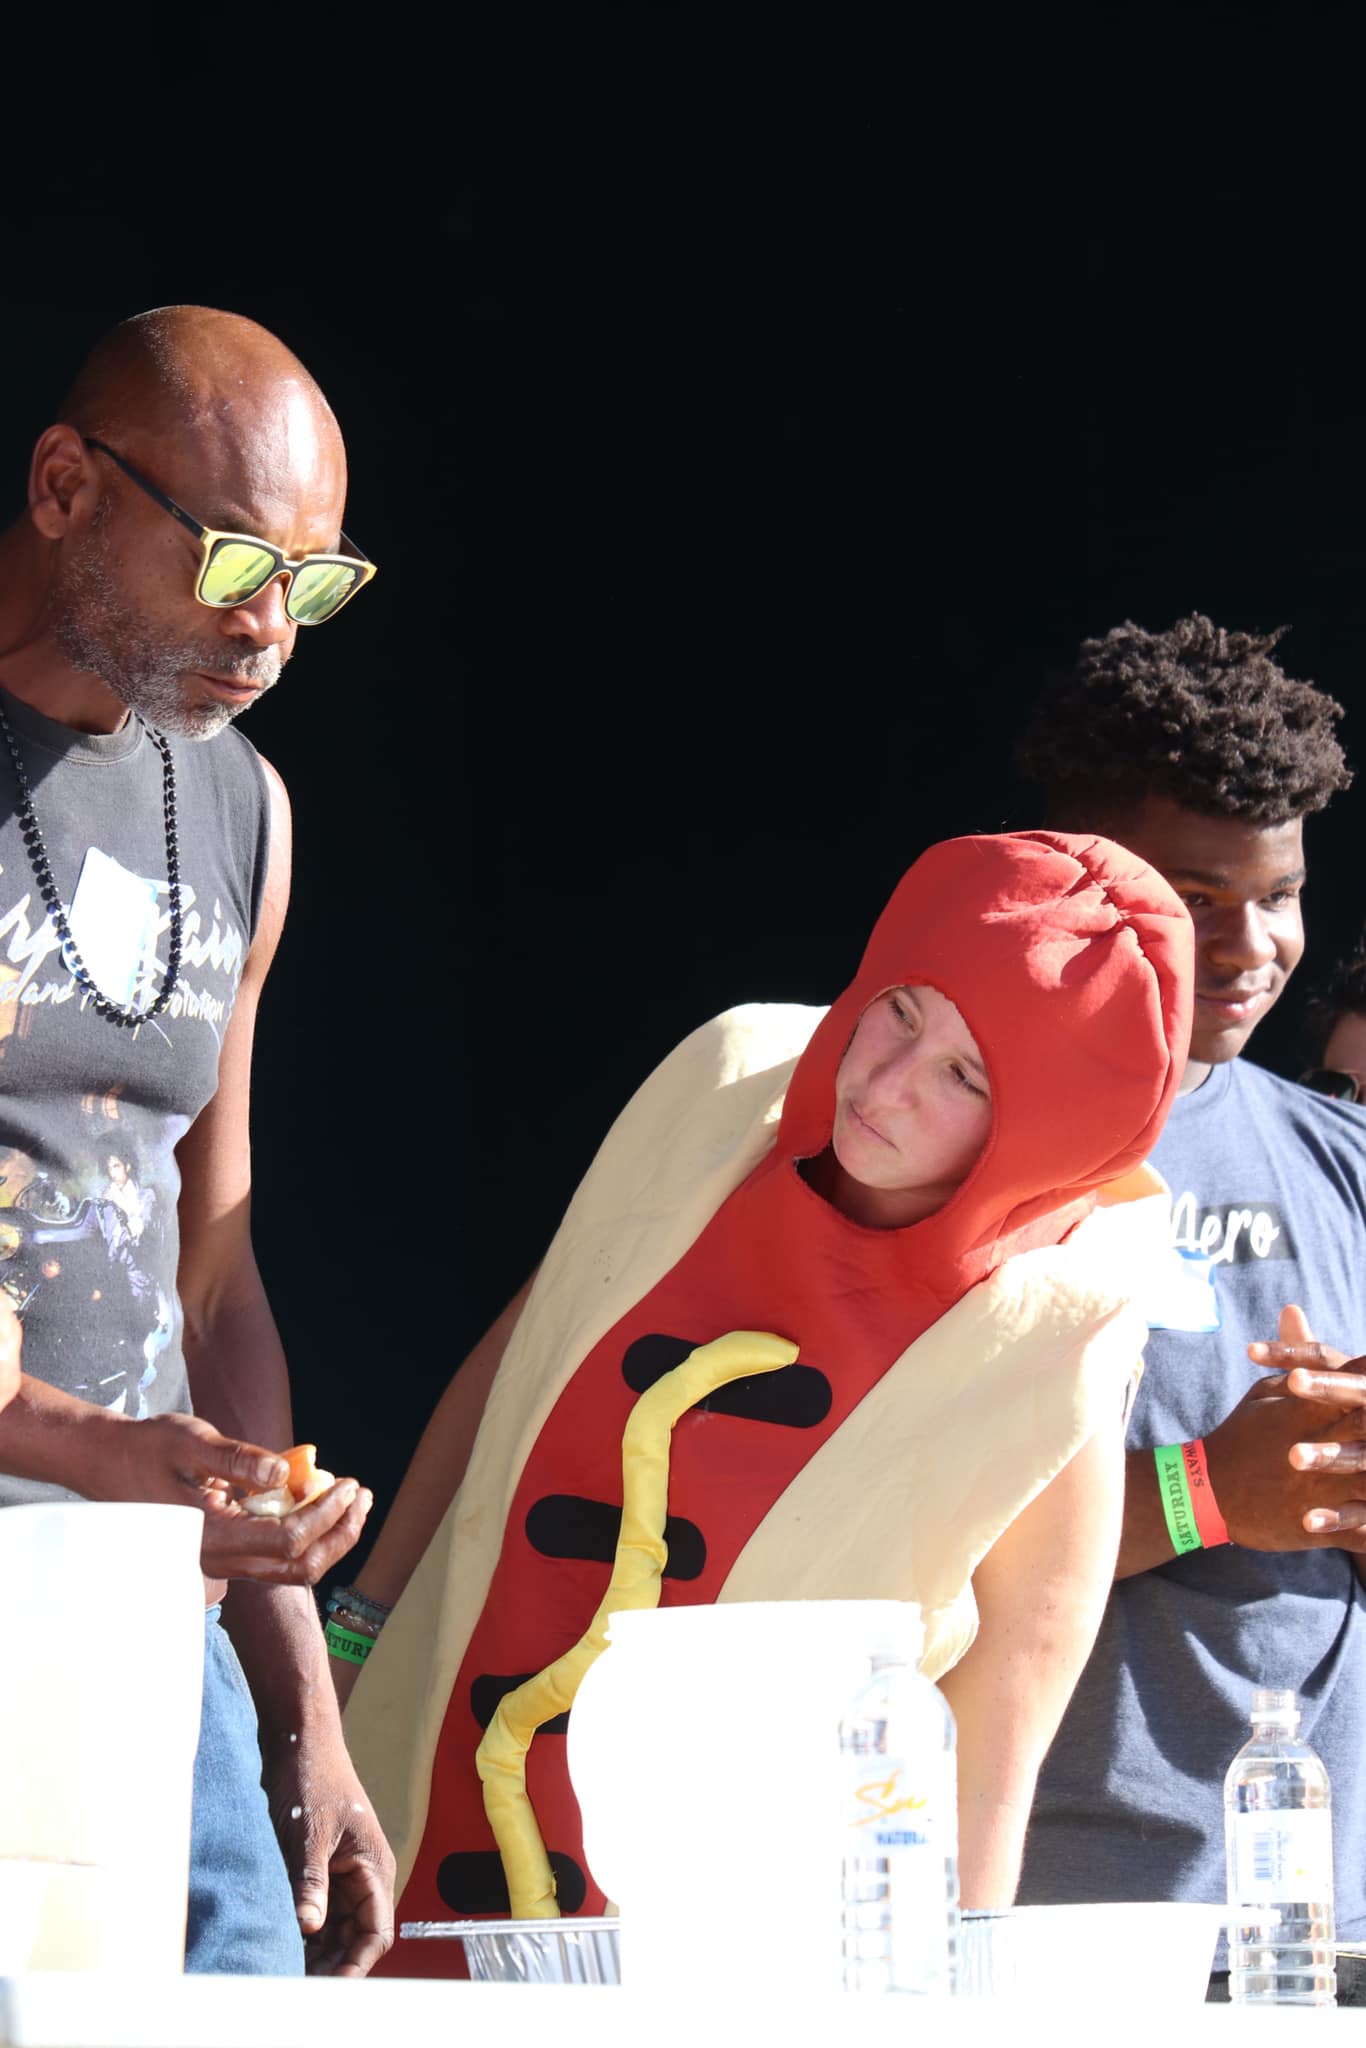 Photos: The Flint River Fair and Hot Dog Eating Contest